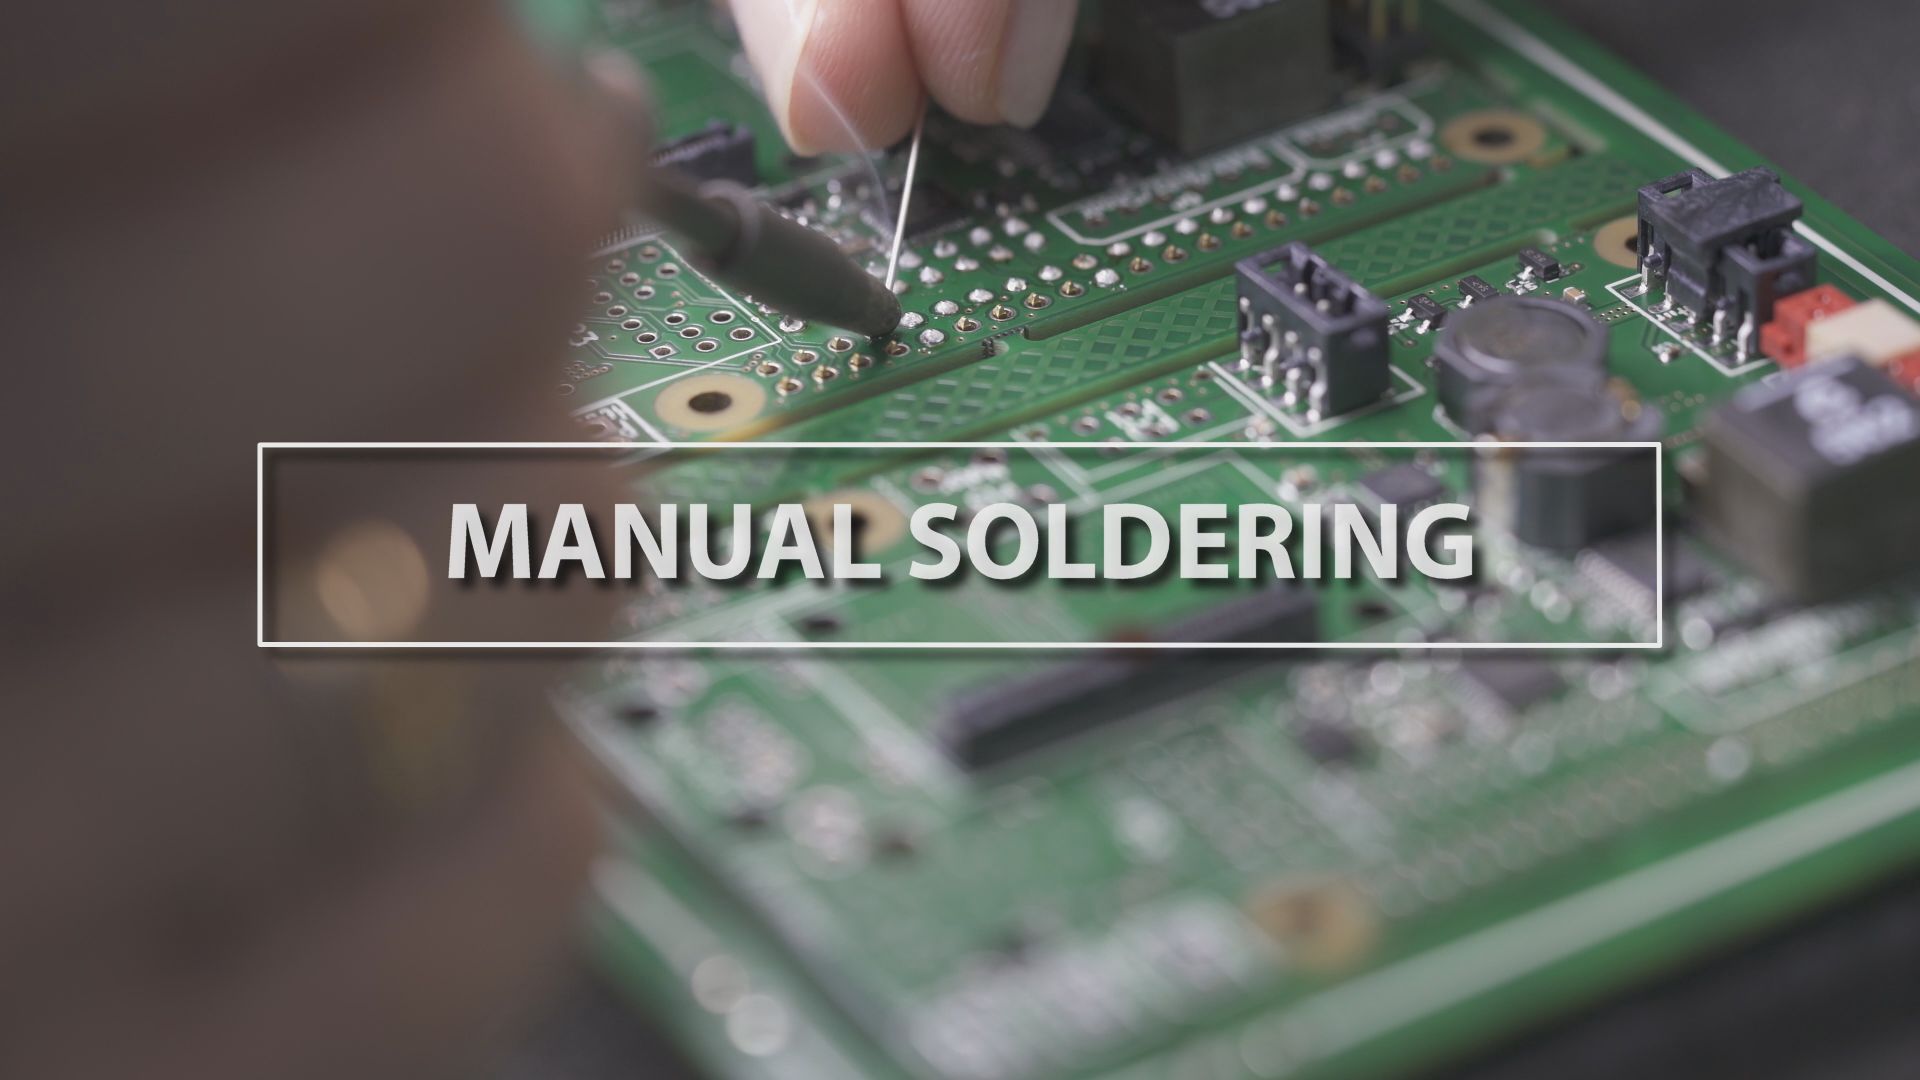 Technology Thursday: Manual Soldering